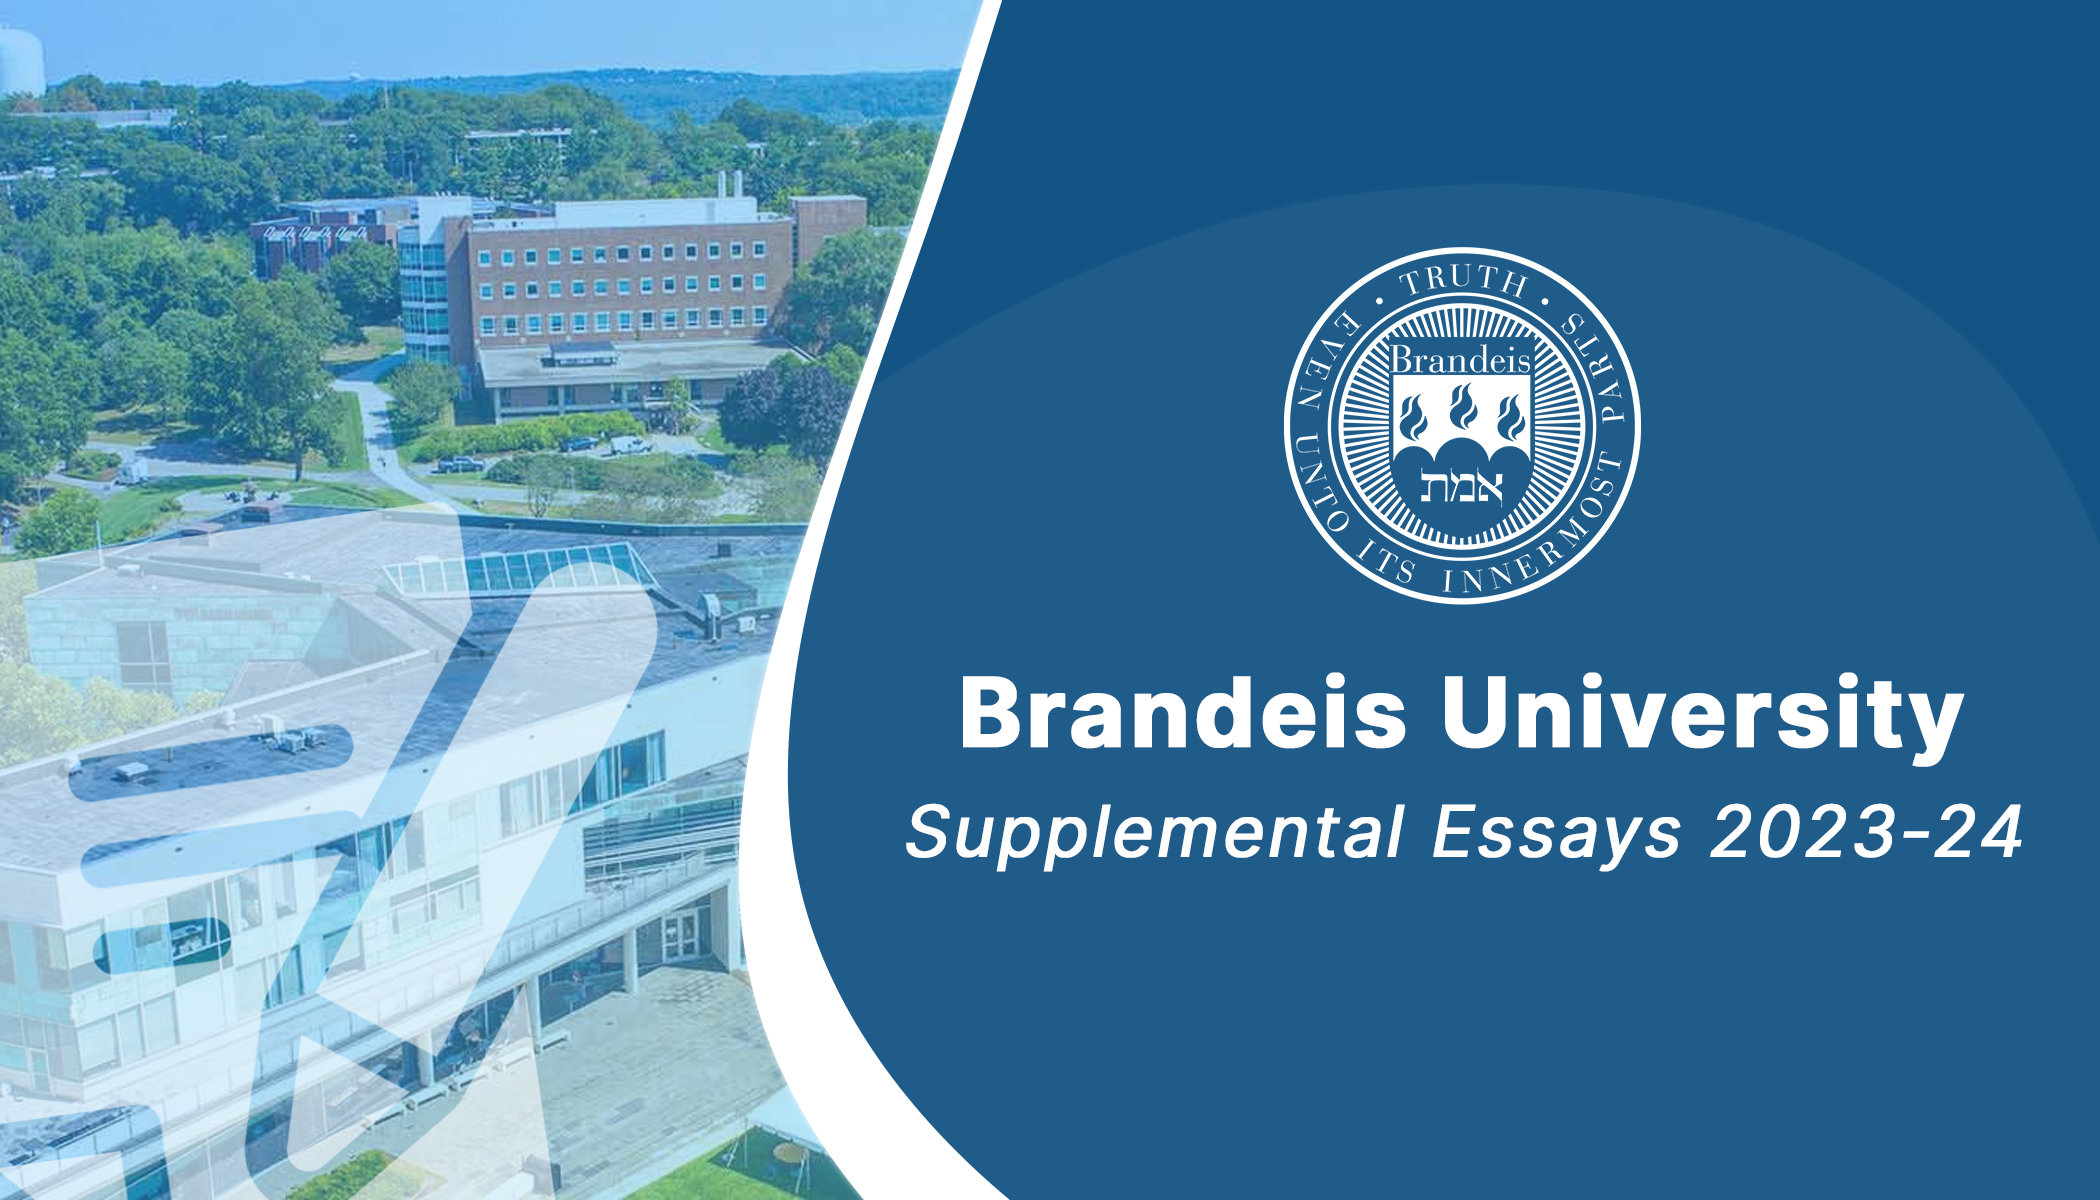 brandeis university supplemental essay